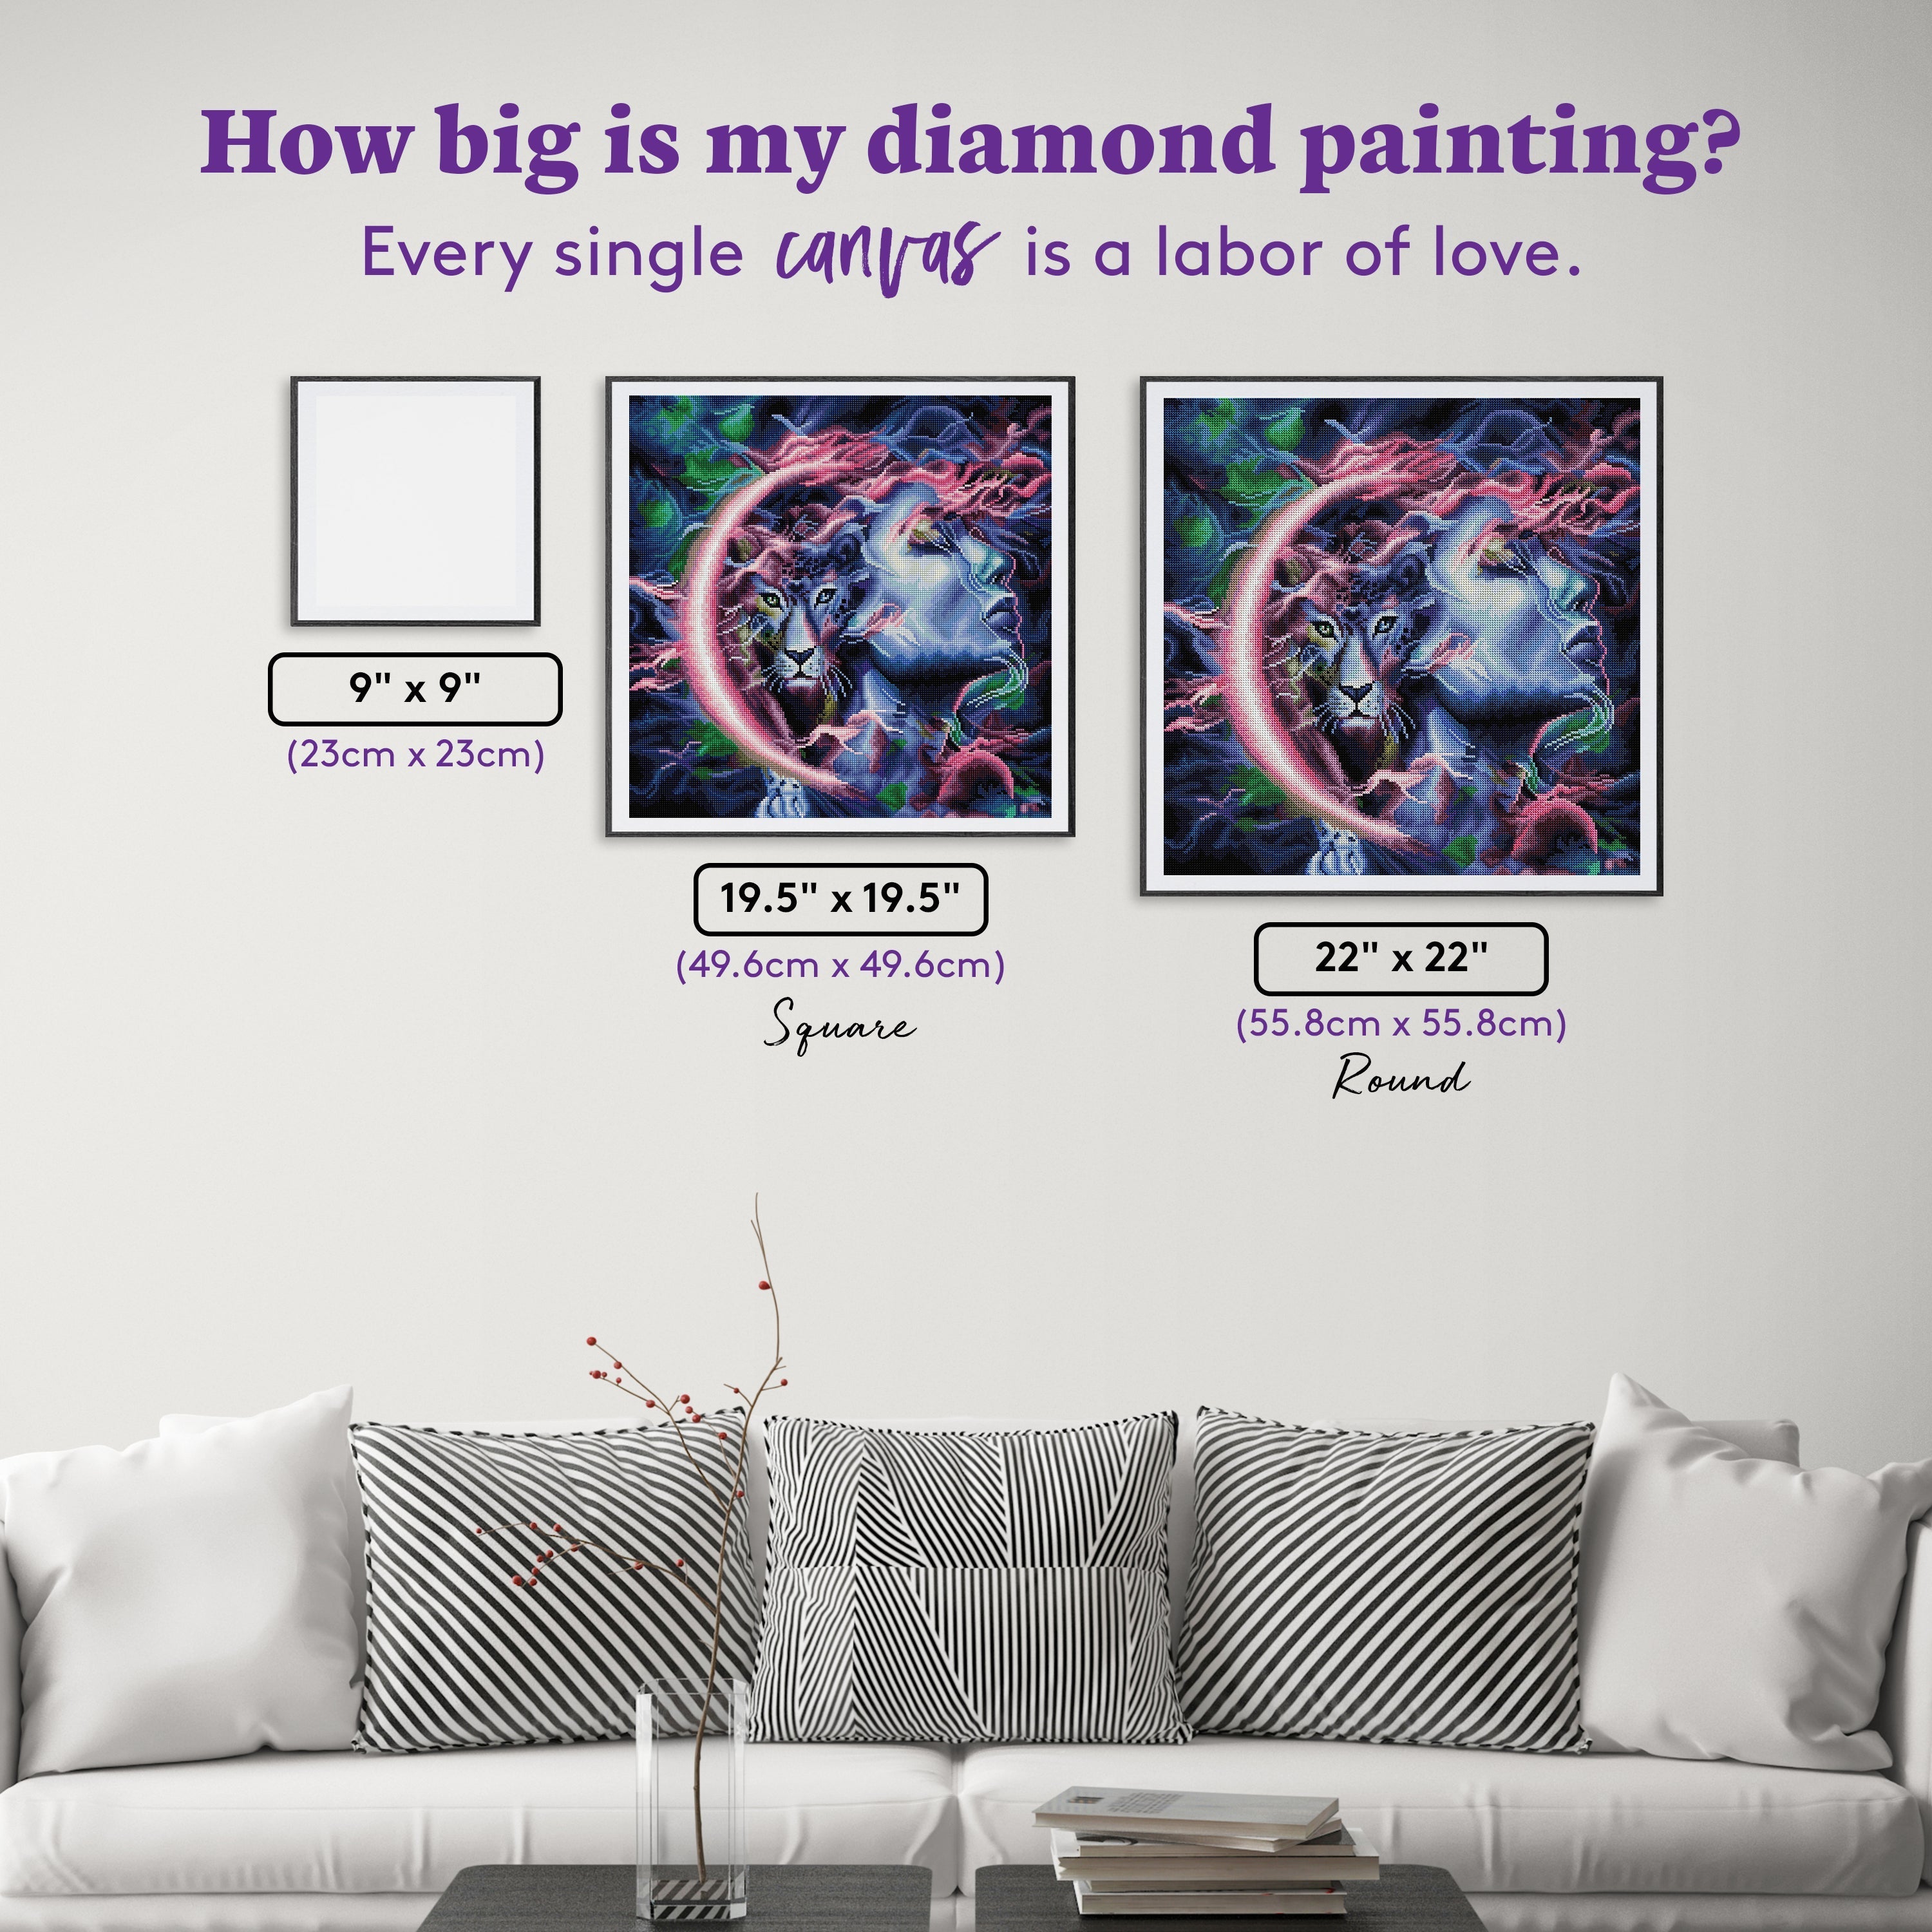 5D Diamond Art Painting Moon,Large Diamond Painting Kits for